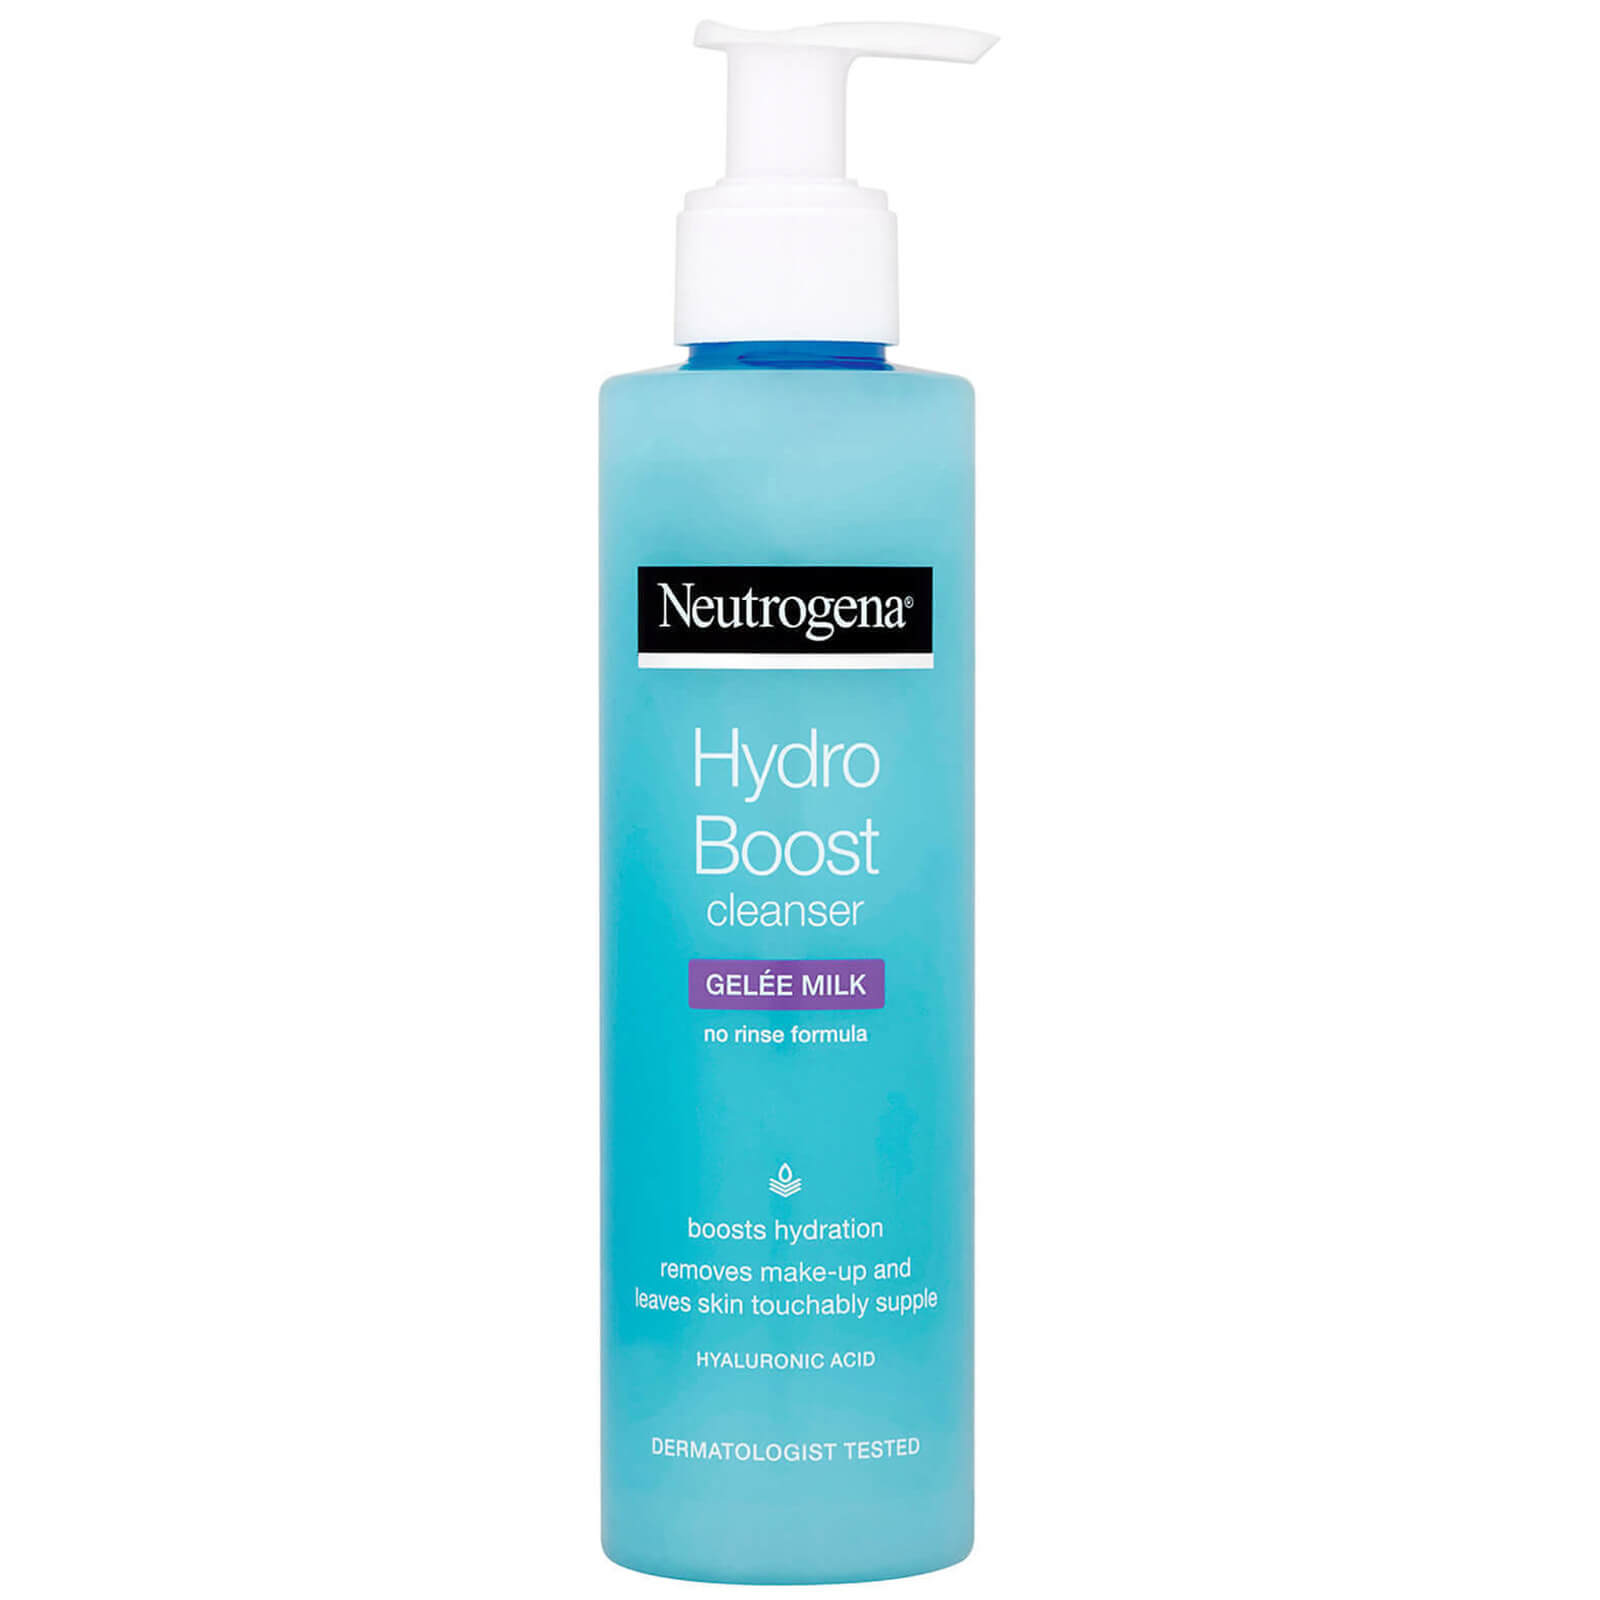 Photos - Facial / Body Cleansing Product Neutrogena Hydro Boost Gelée Milk Cleanser 200ml 12400 